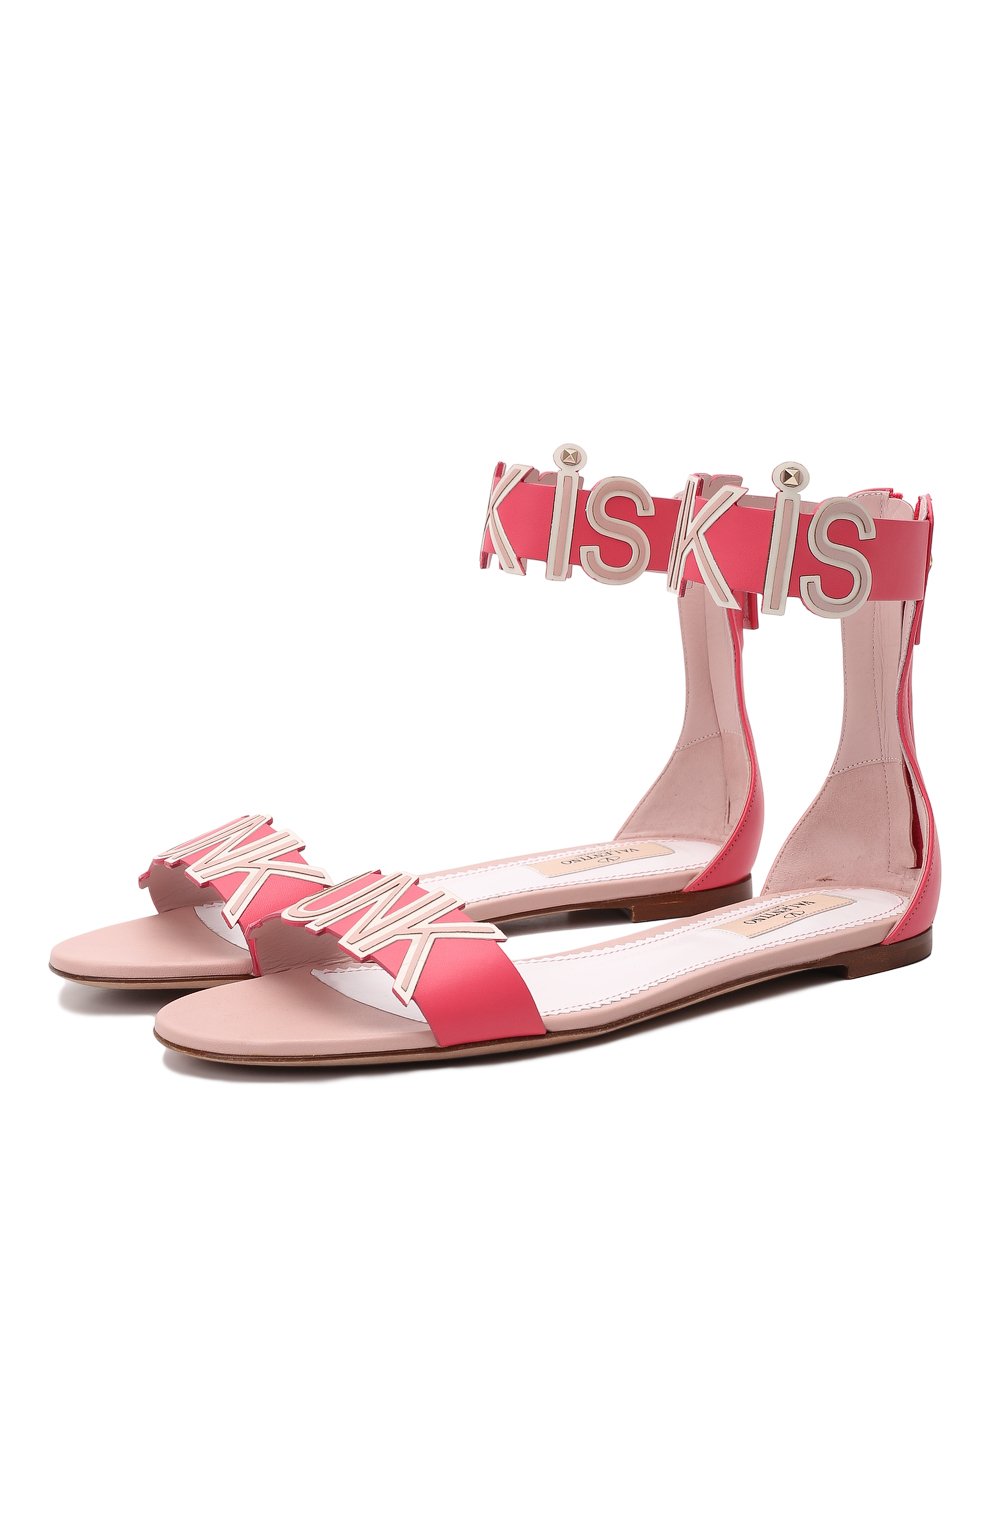 Кожаные сандалии | Valentino | Розовый - 1